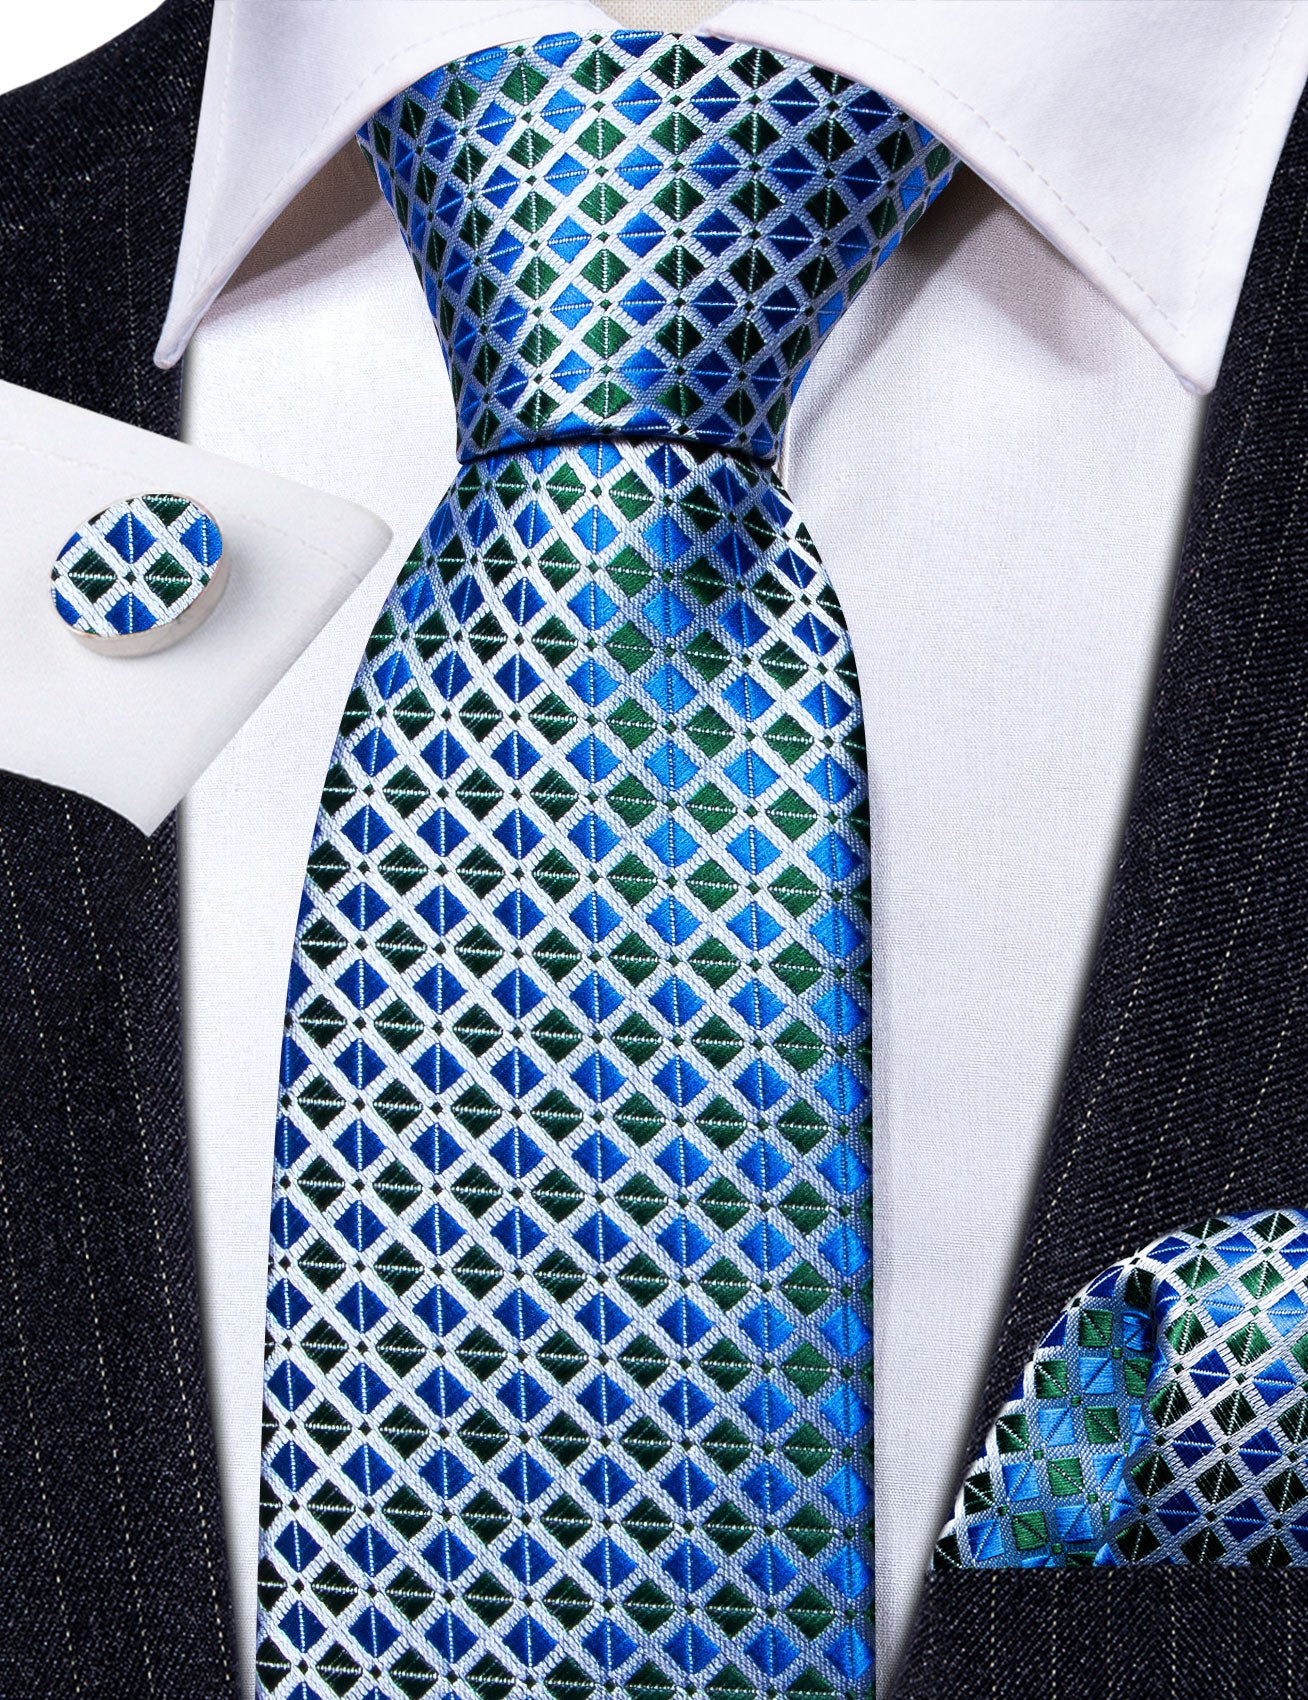 Barry.wang Blue Tie Teal Lattice Silk Tie Handkerchief Cufflinks Set